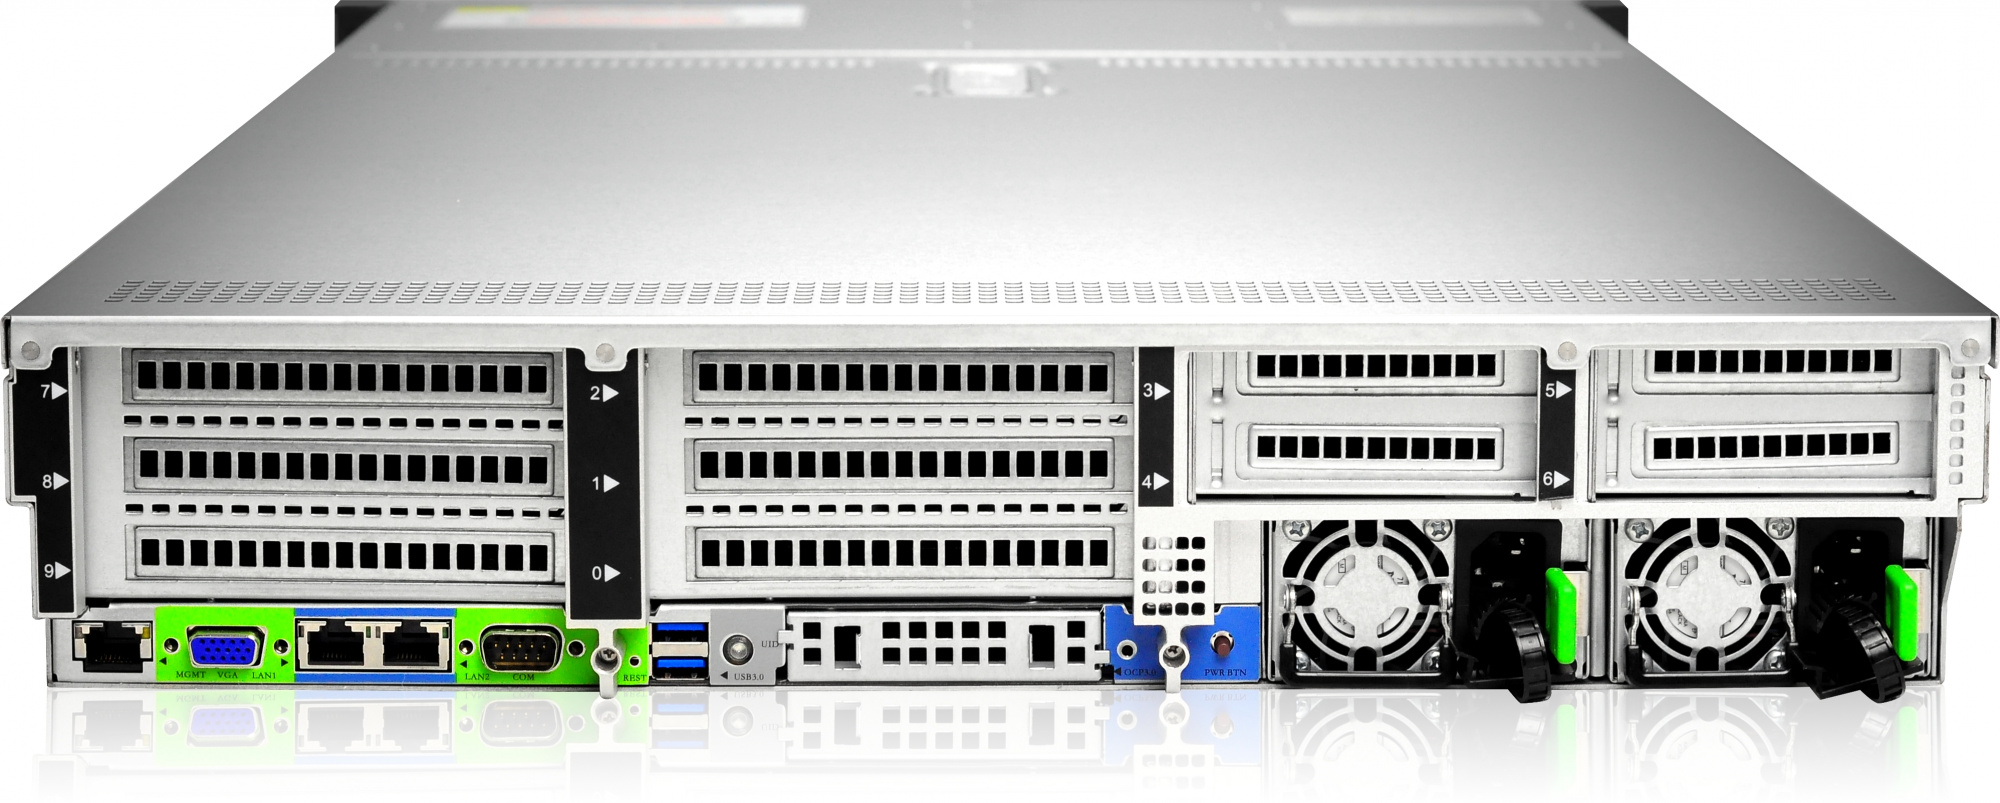 Sl server. Gooxi sl201-d08r-g3. Сервер Iru. Серверная платформа 2u Gigabyte r282-3c0. HOTSWAP sl201-3.5-mm Gooxi.